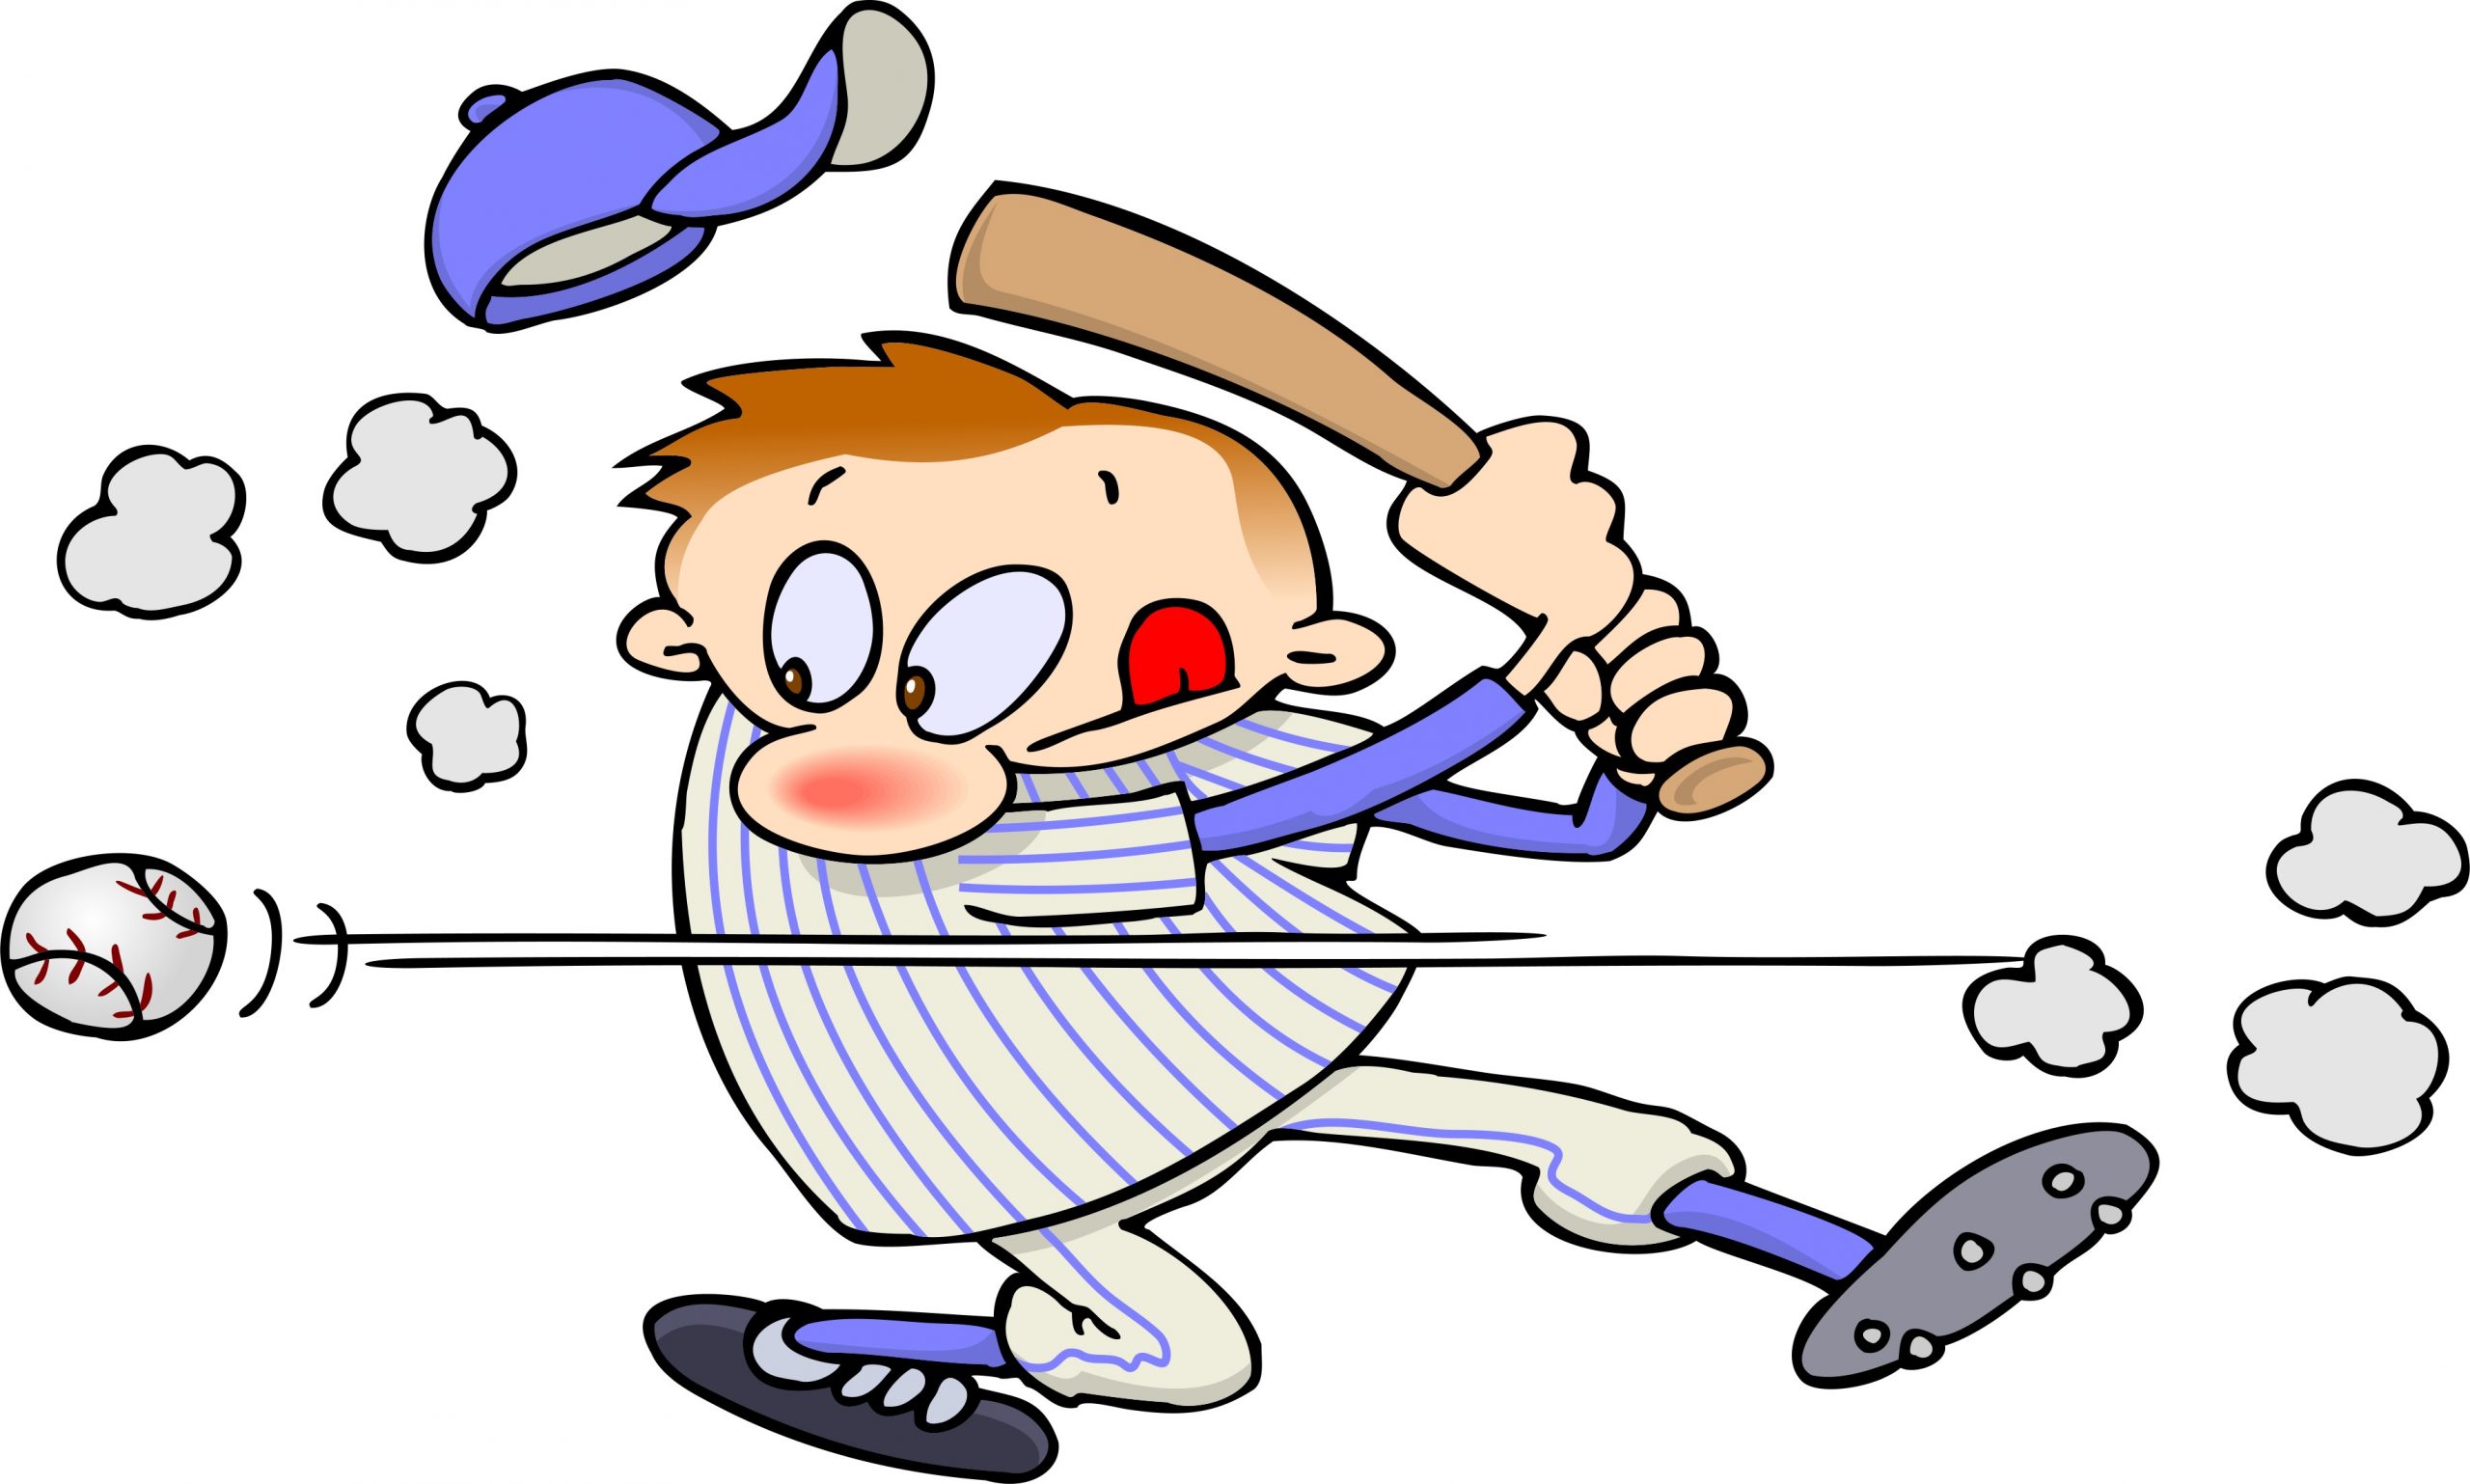 https://depositphotos.com/3063887/stock-illustration-baseball-player.html